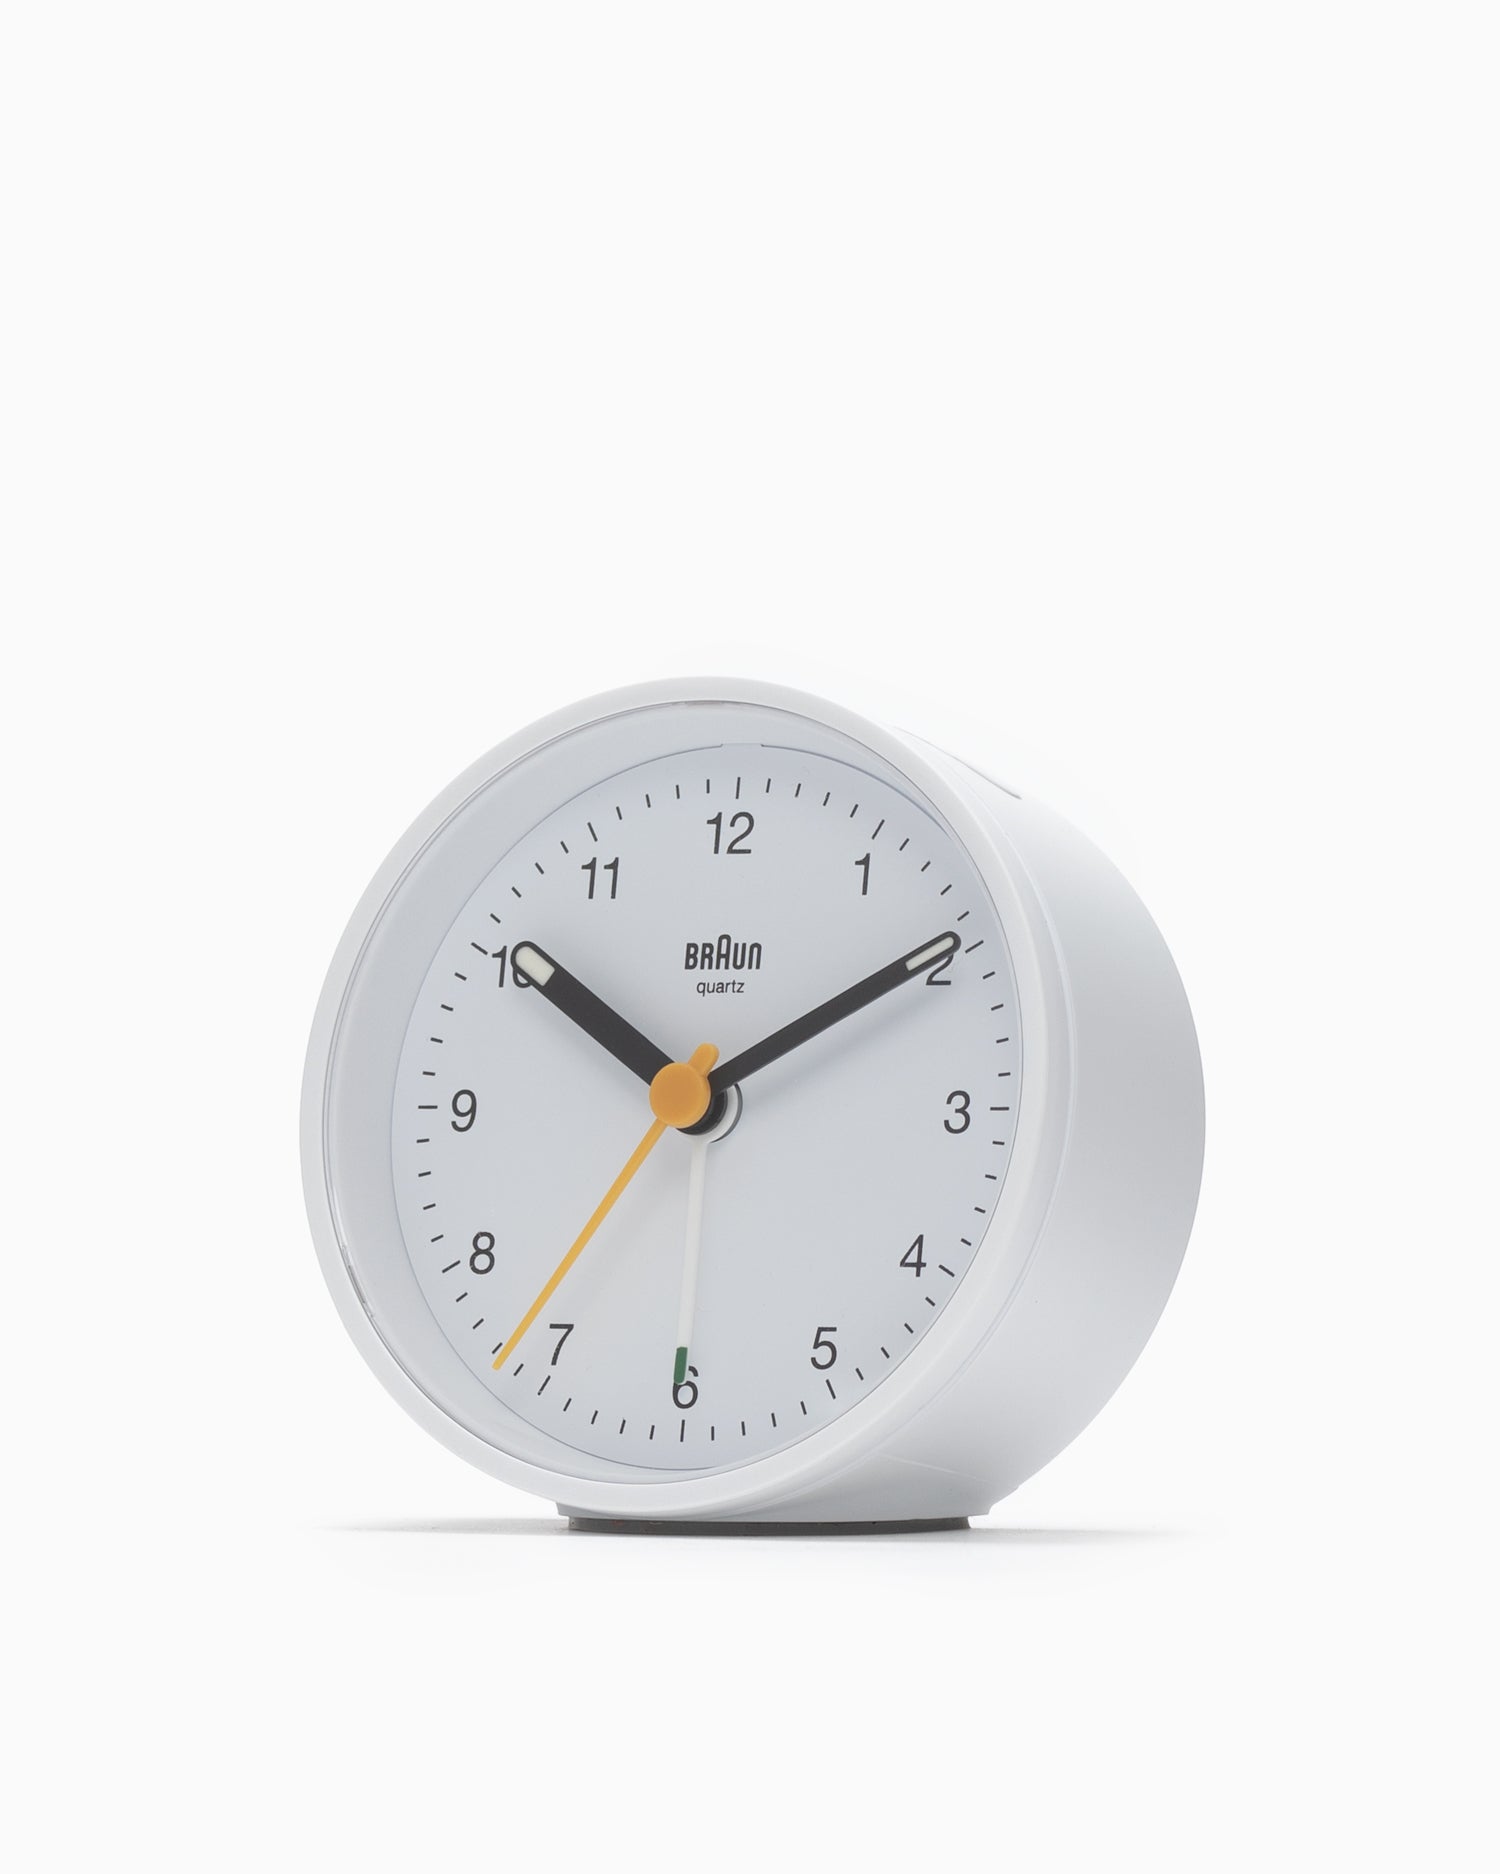 Braun Classic Alarm Clock - White